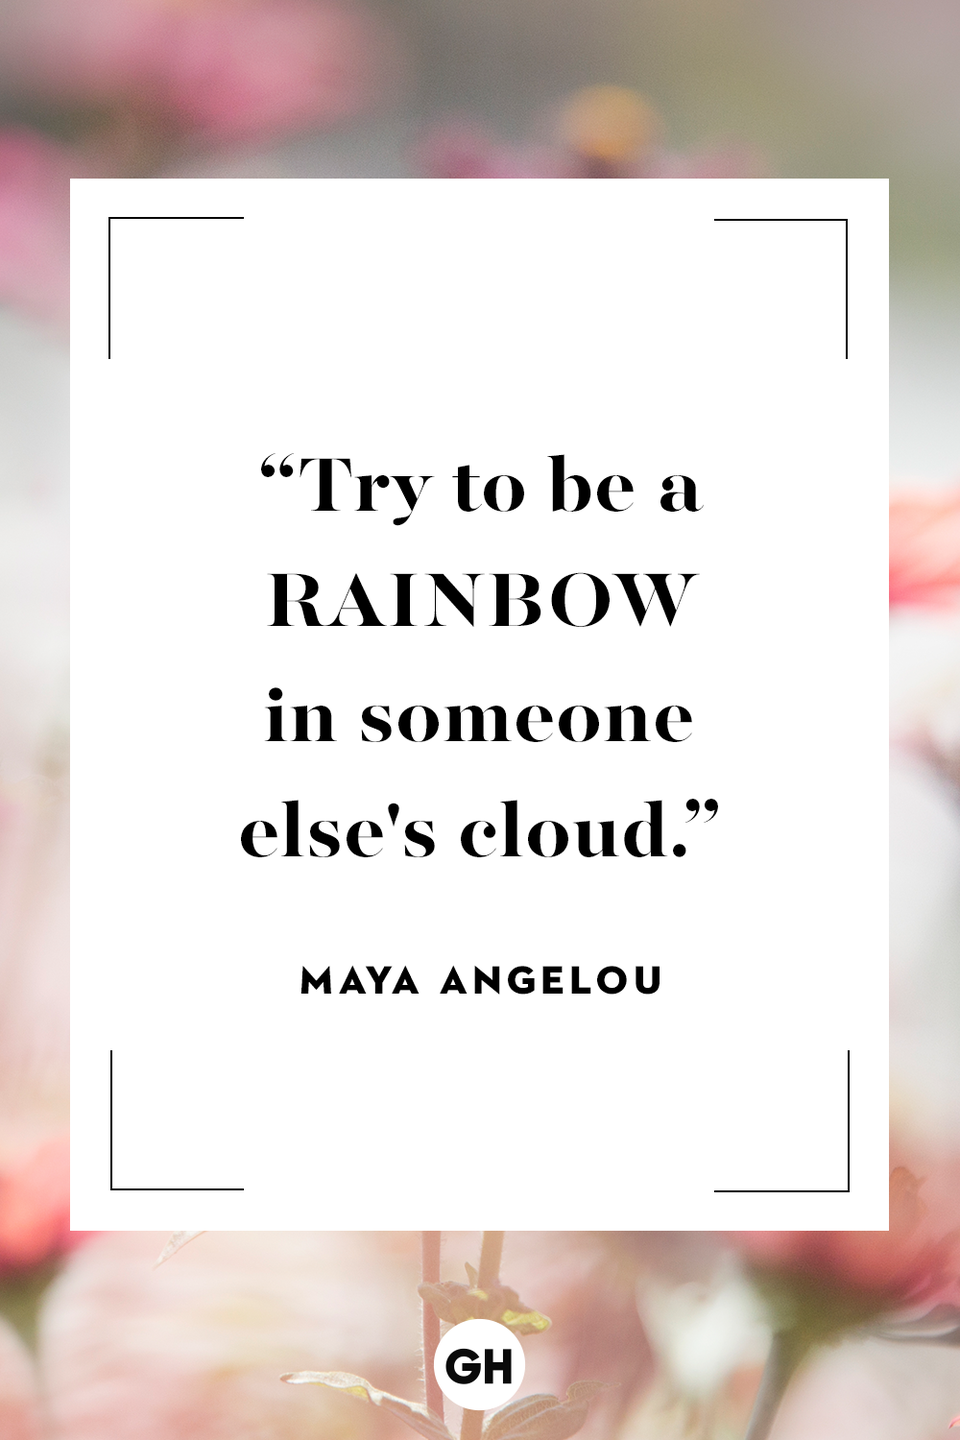 68) Maya Angelou